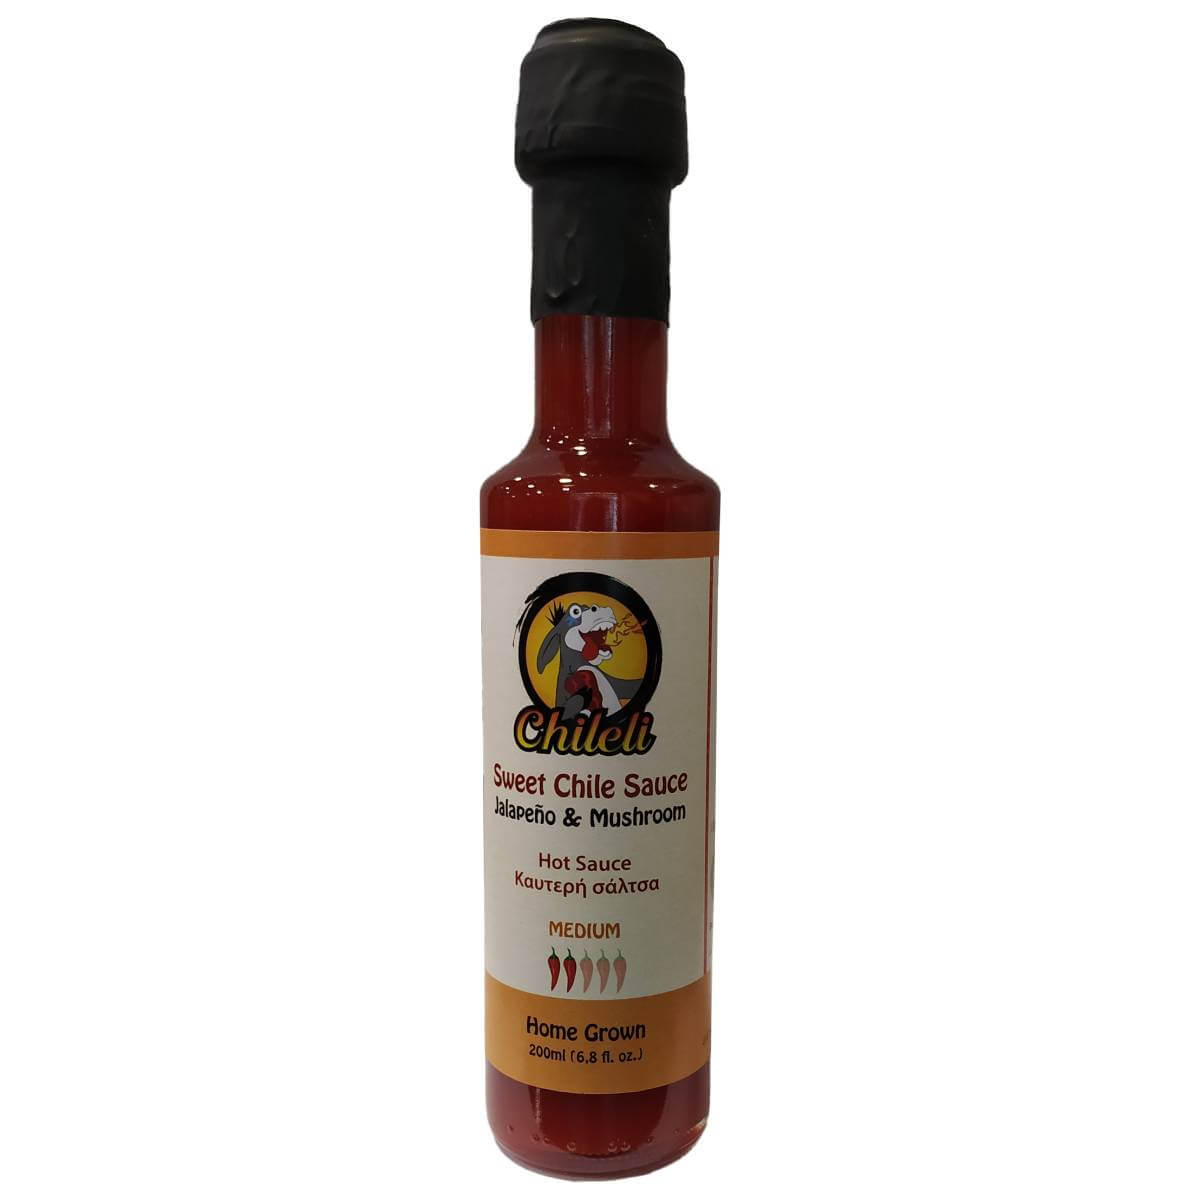 Sweet Chile Sauce, Καυτερή Σάλτσα, Chileli, 200ml - Βιολογικά Προϊόντα ...